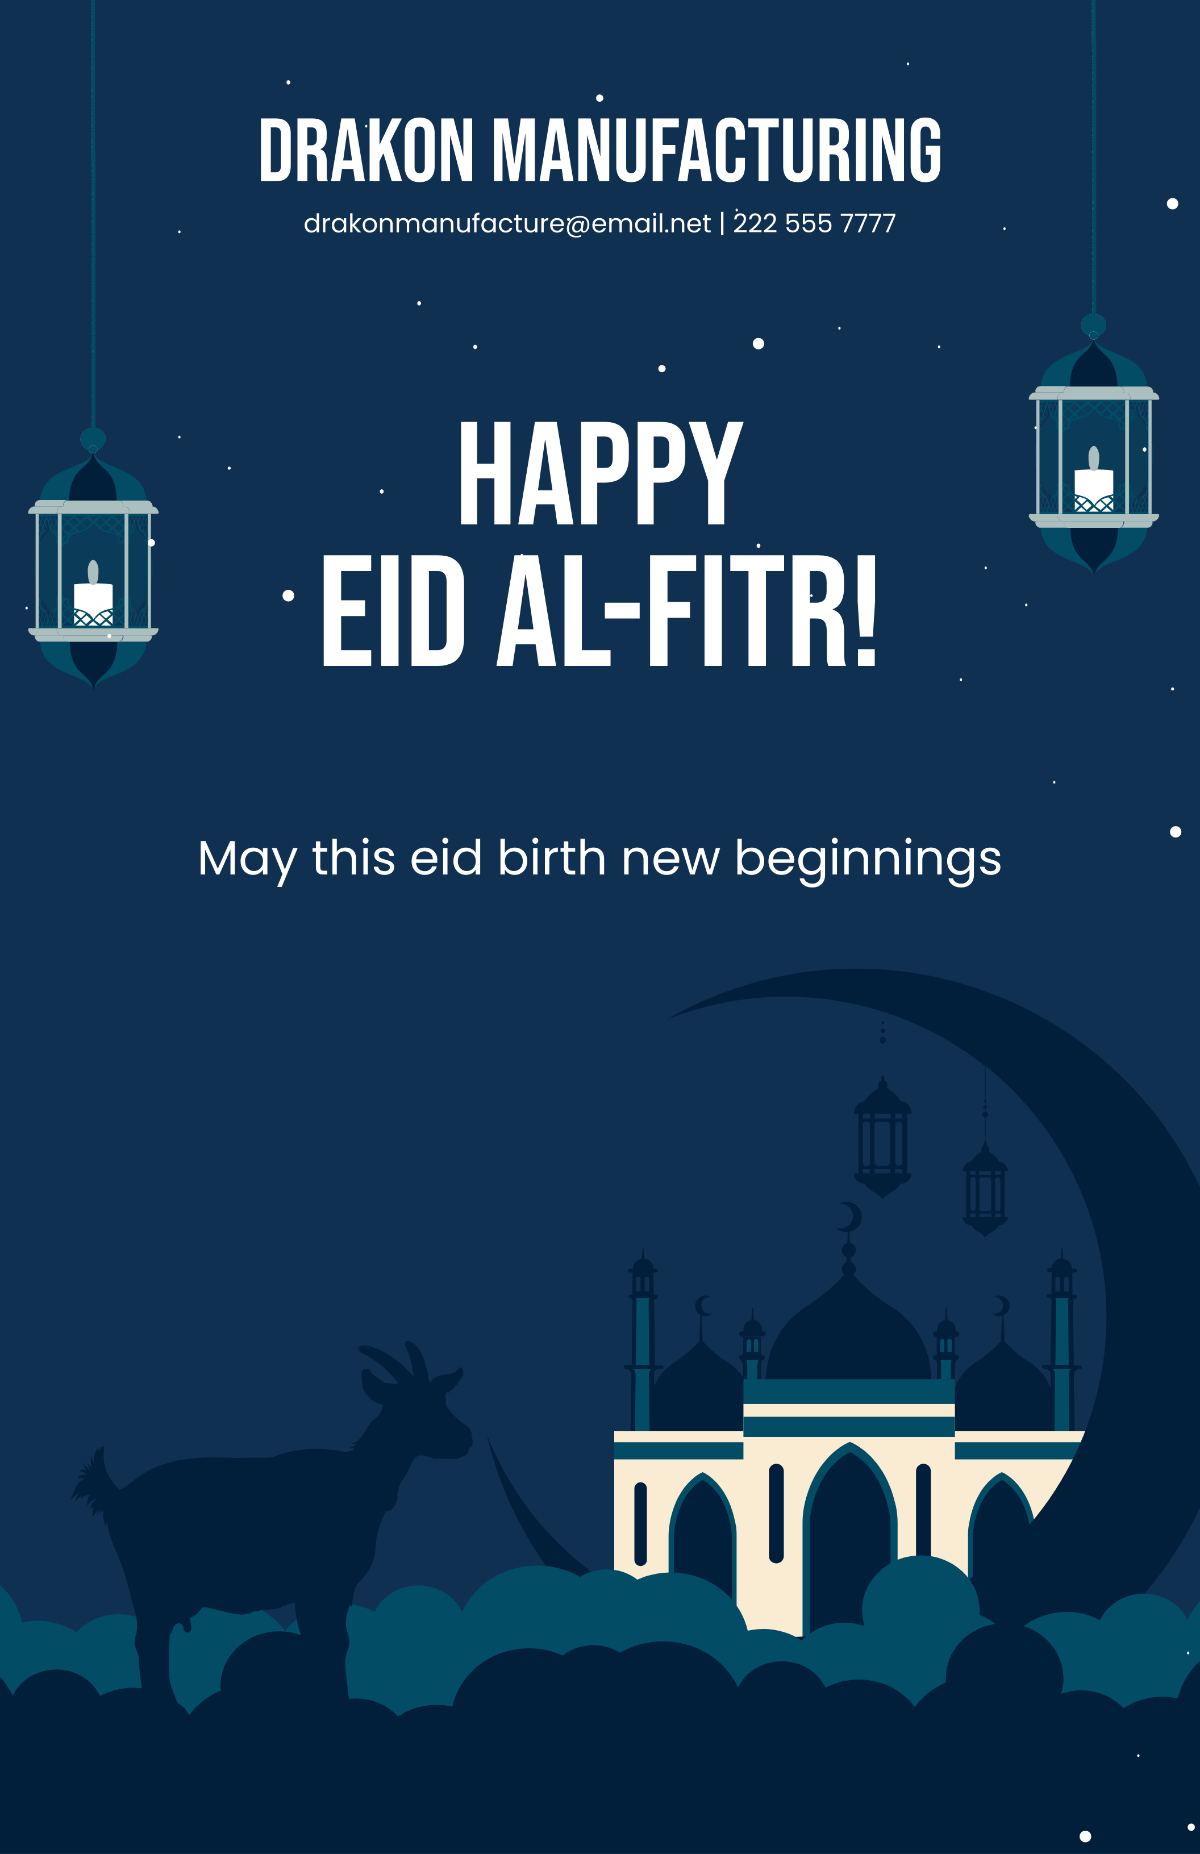 Free Happy Eid al-Fitr Poster Template